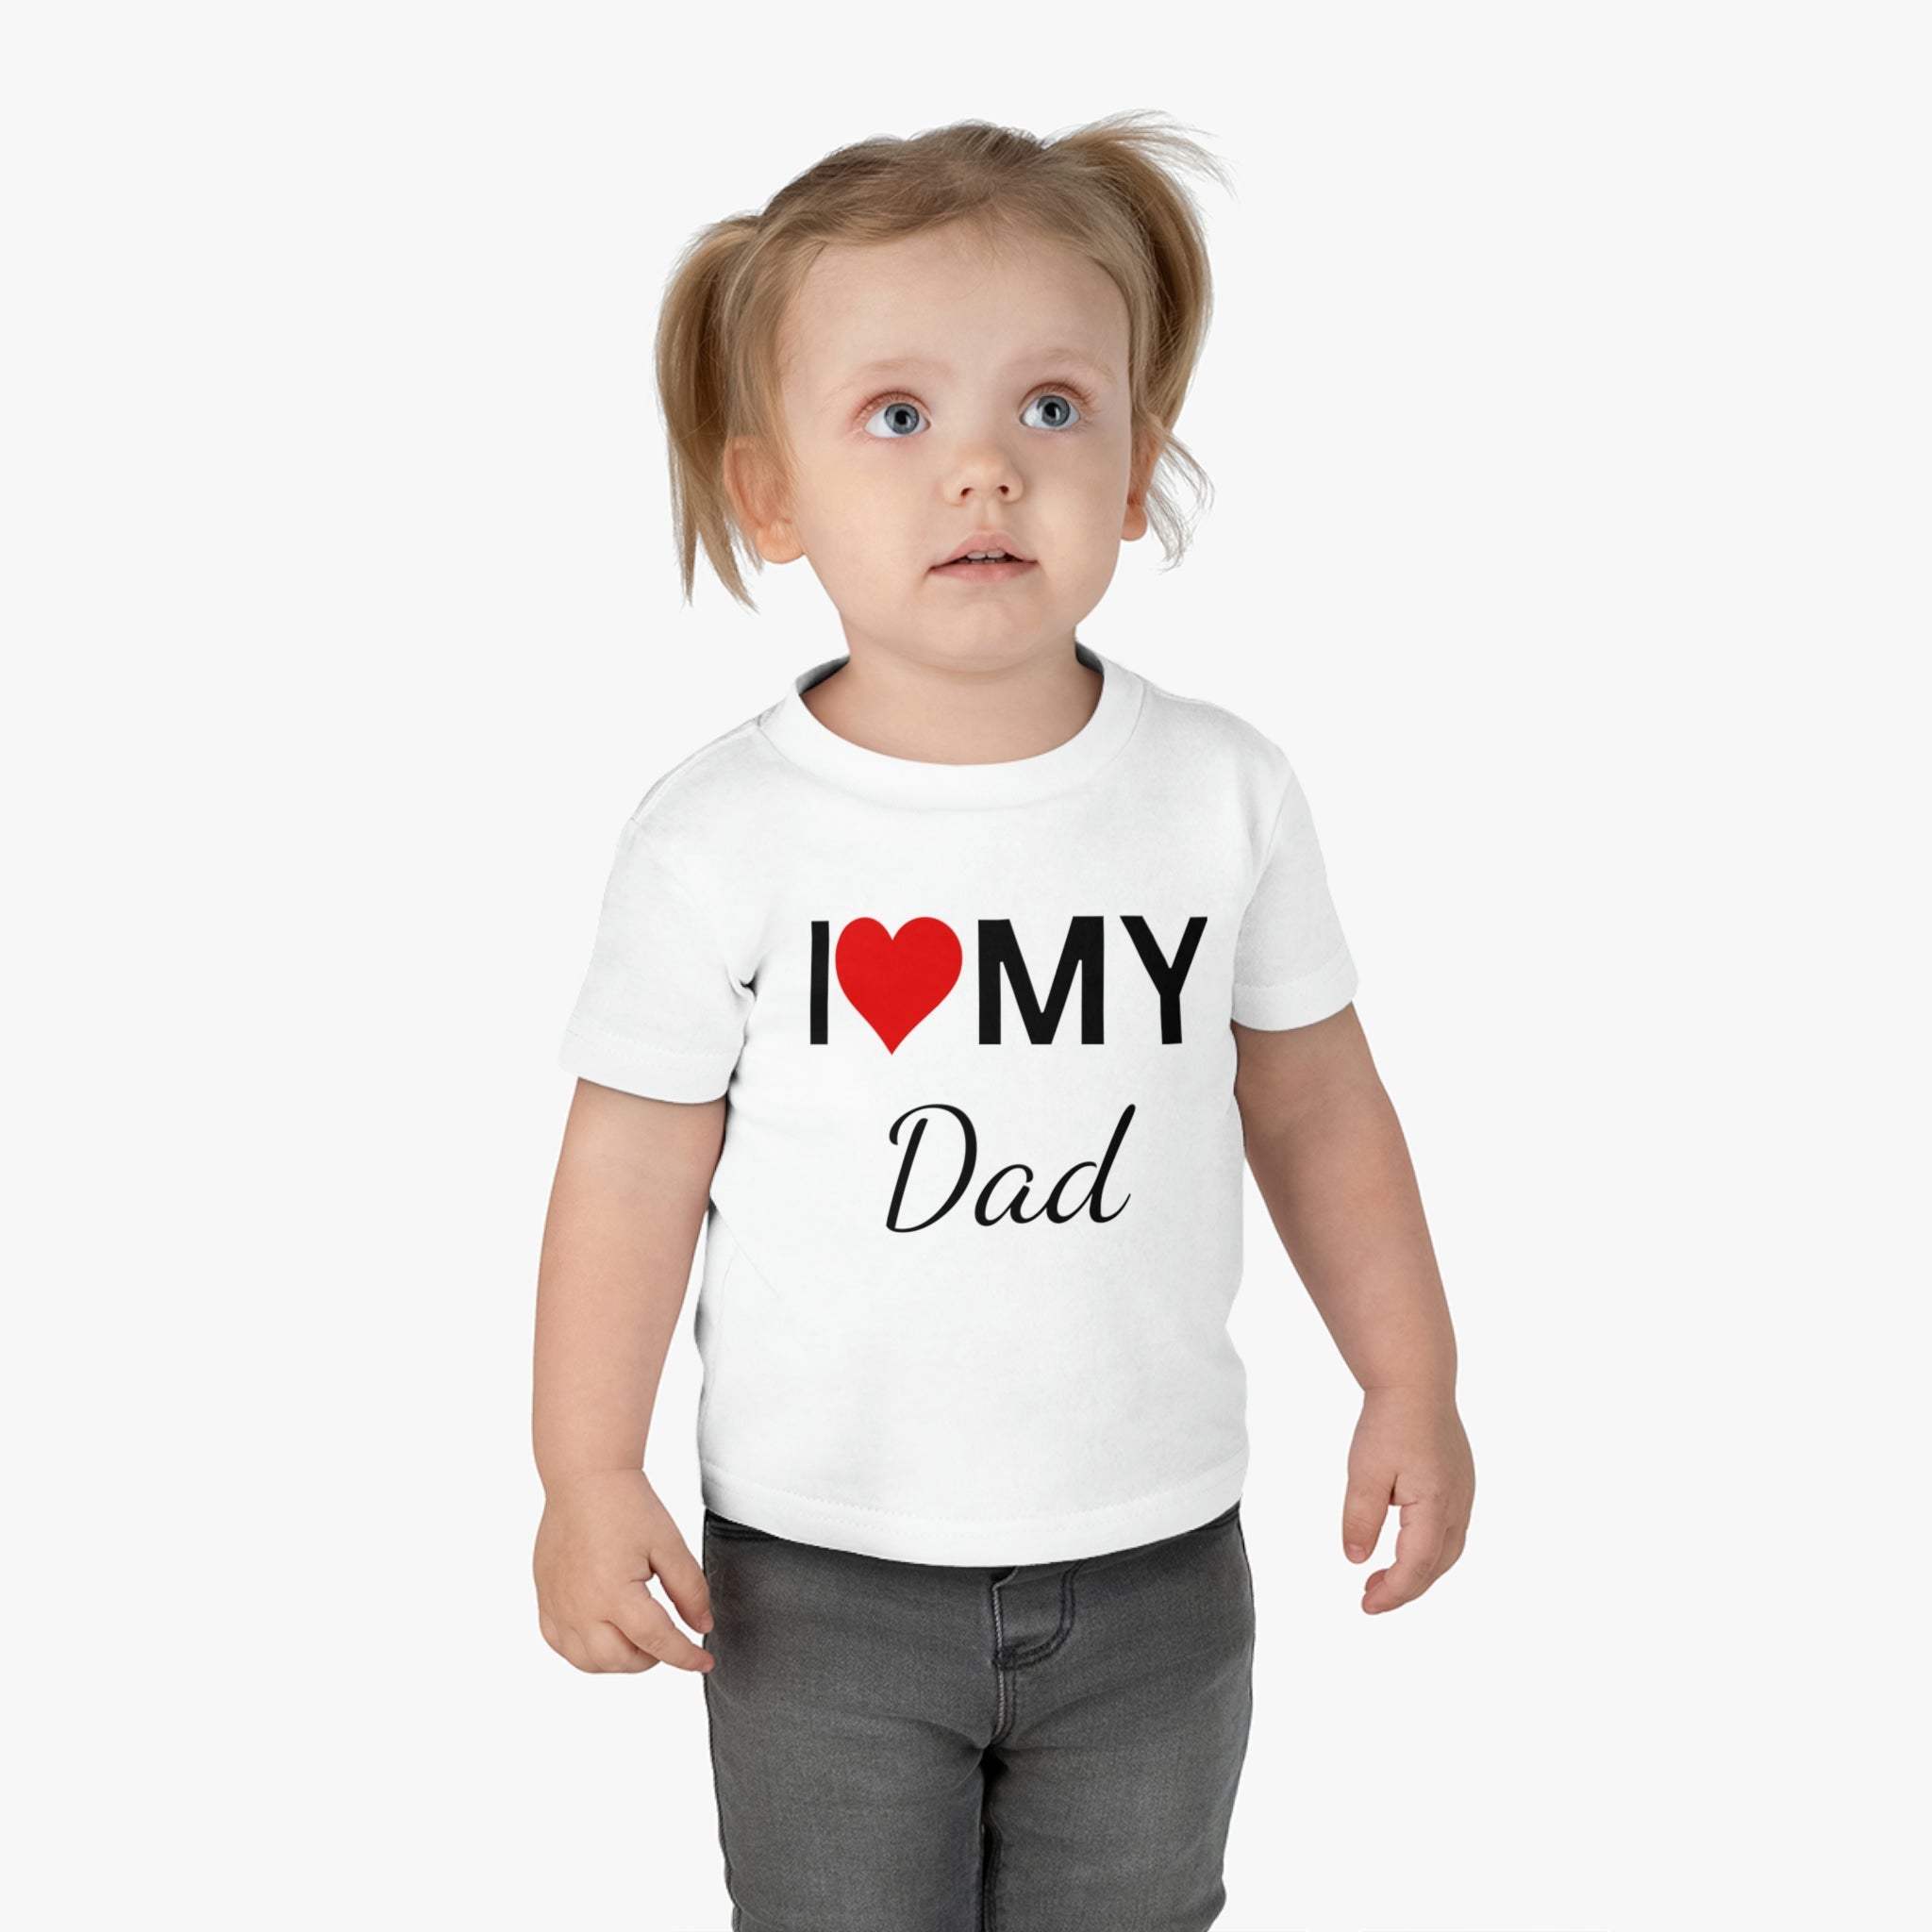 I Love My Dad Infant Shirt, Baby Tee, Infant Tee